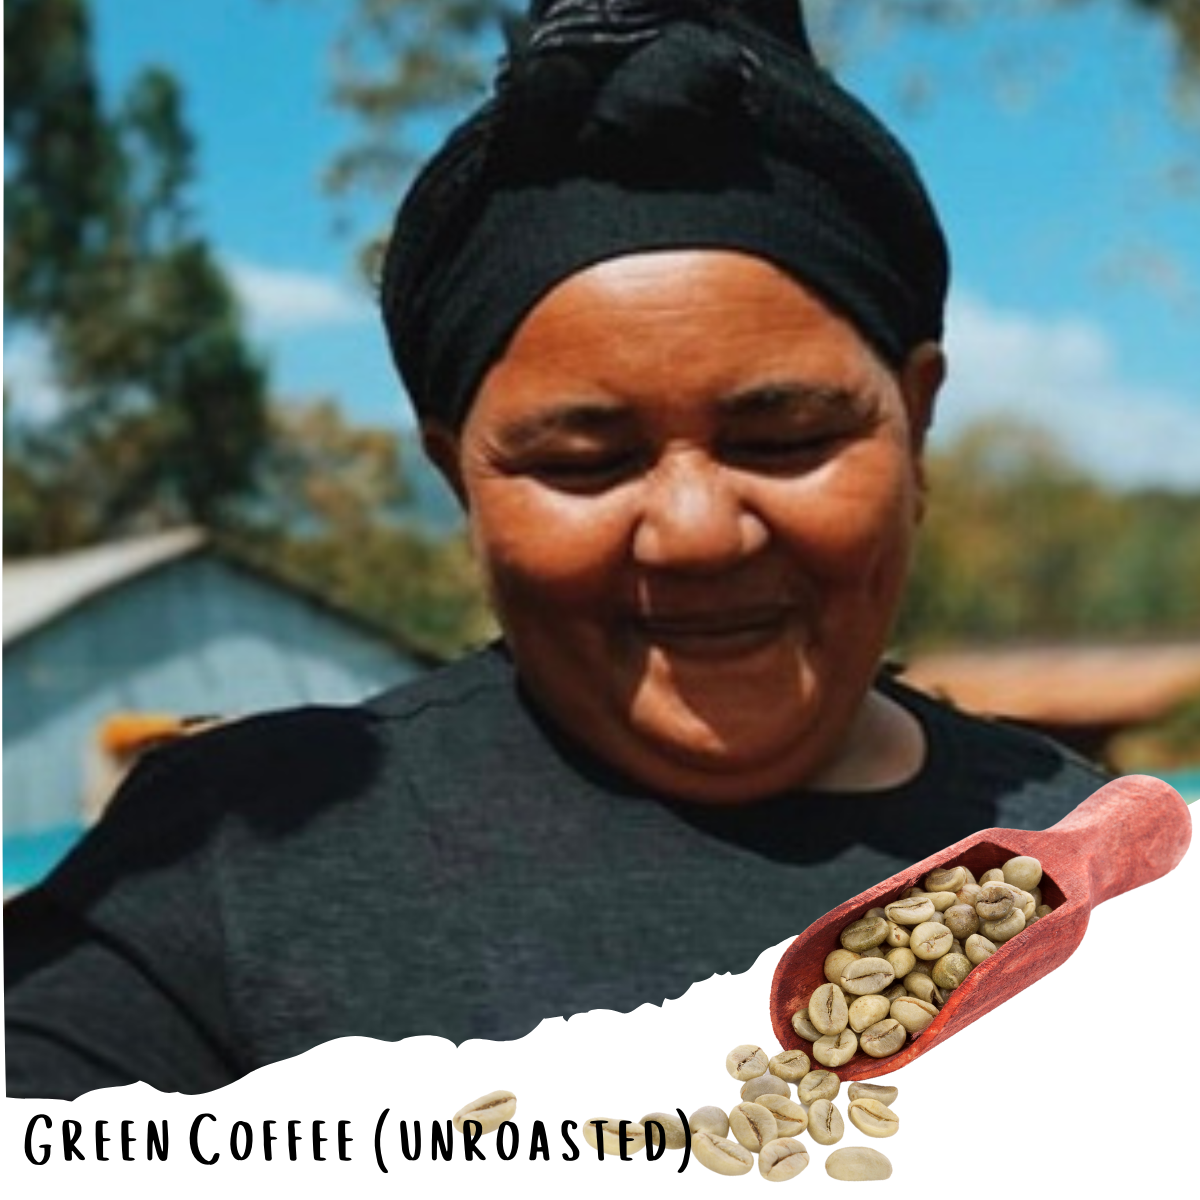 Buze Besha - Farmer Direct Lot - Sidama Bensa Dembi - Washed G1 Ethiopian Specialty Coffee (Unroasted)